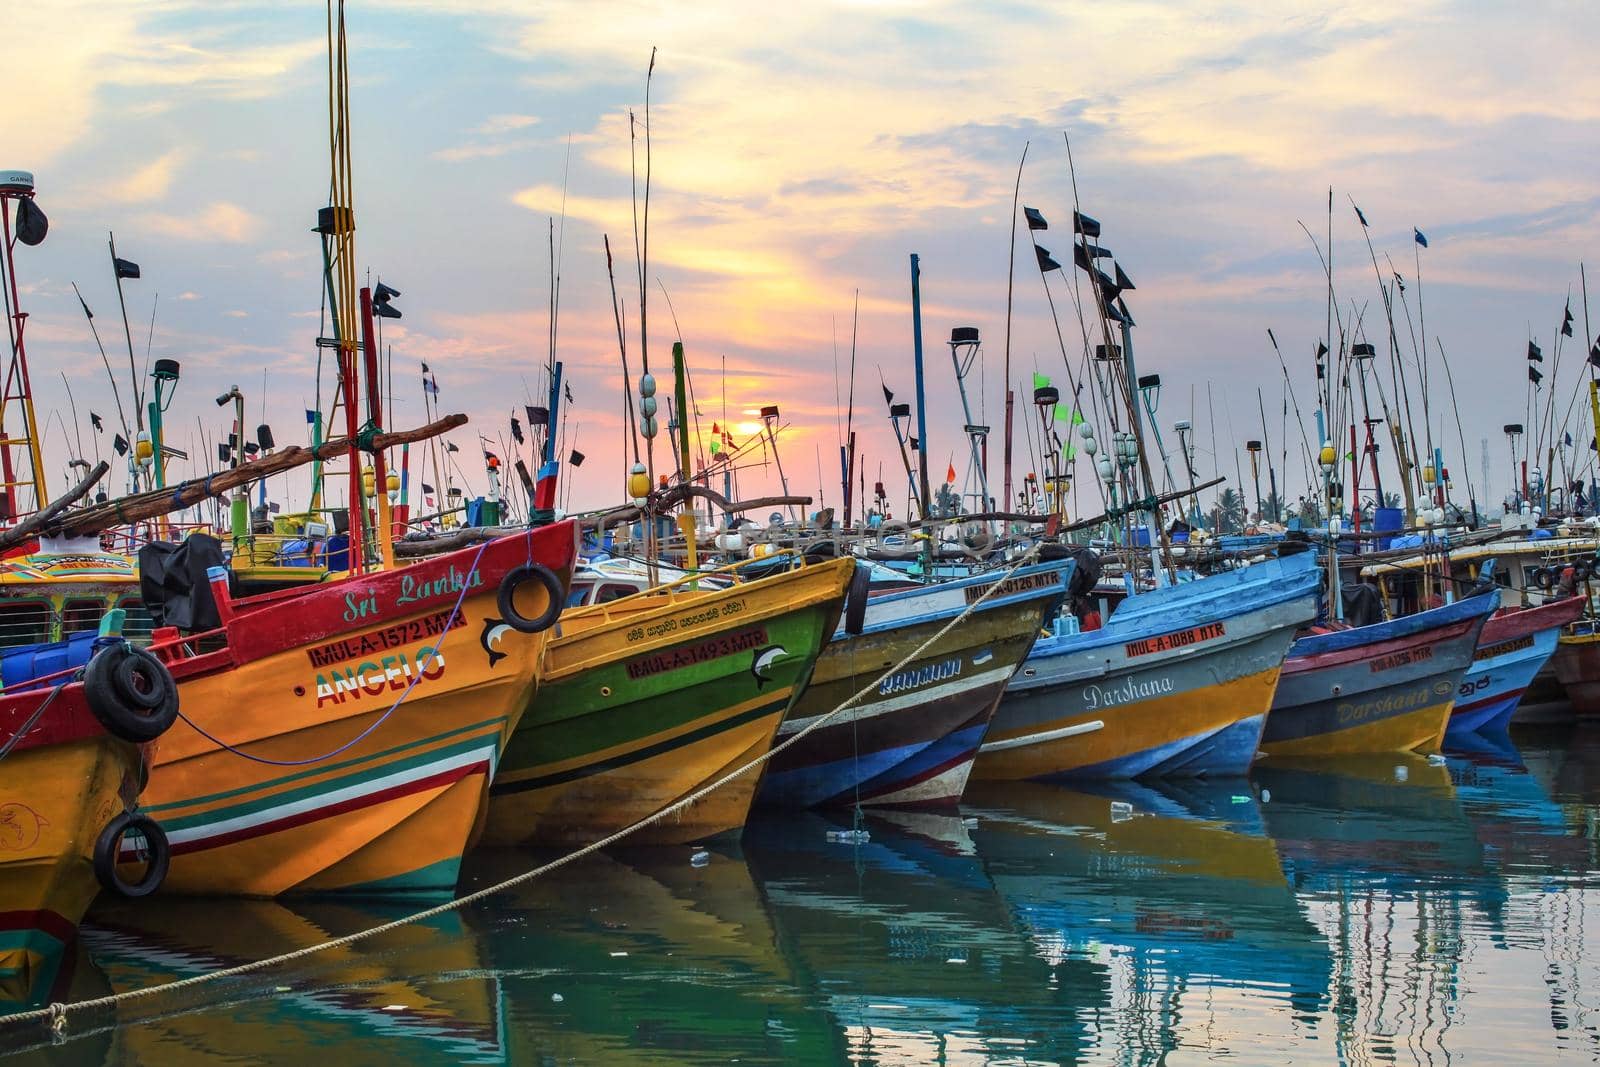 Mirissa, Sri Lanka - April 14, 2017: Colorful boats in Mirissa port with morning sun rising in the background.